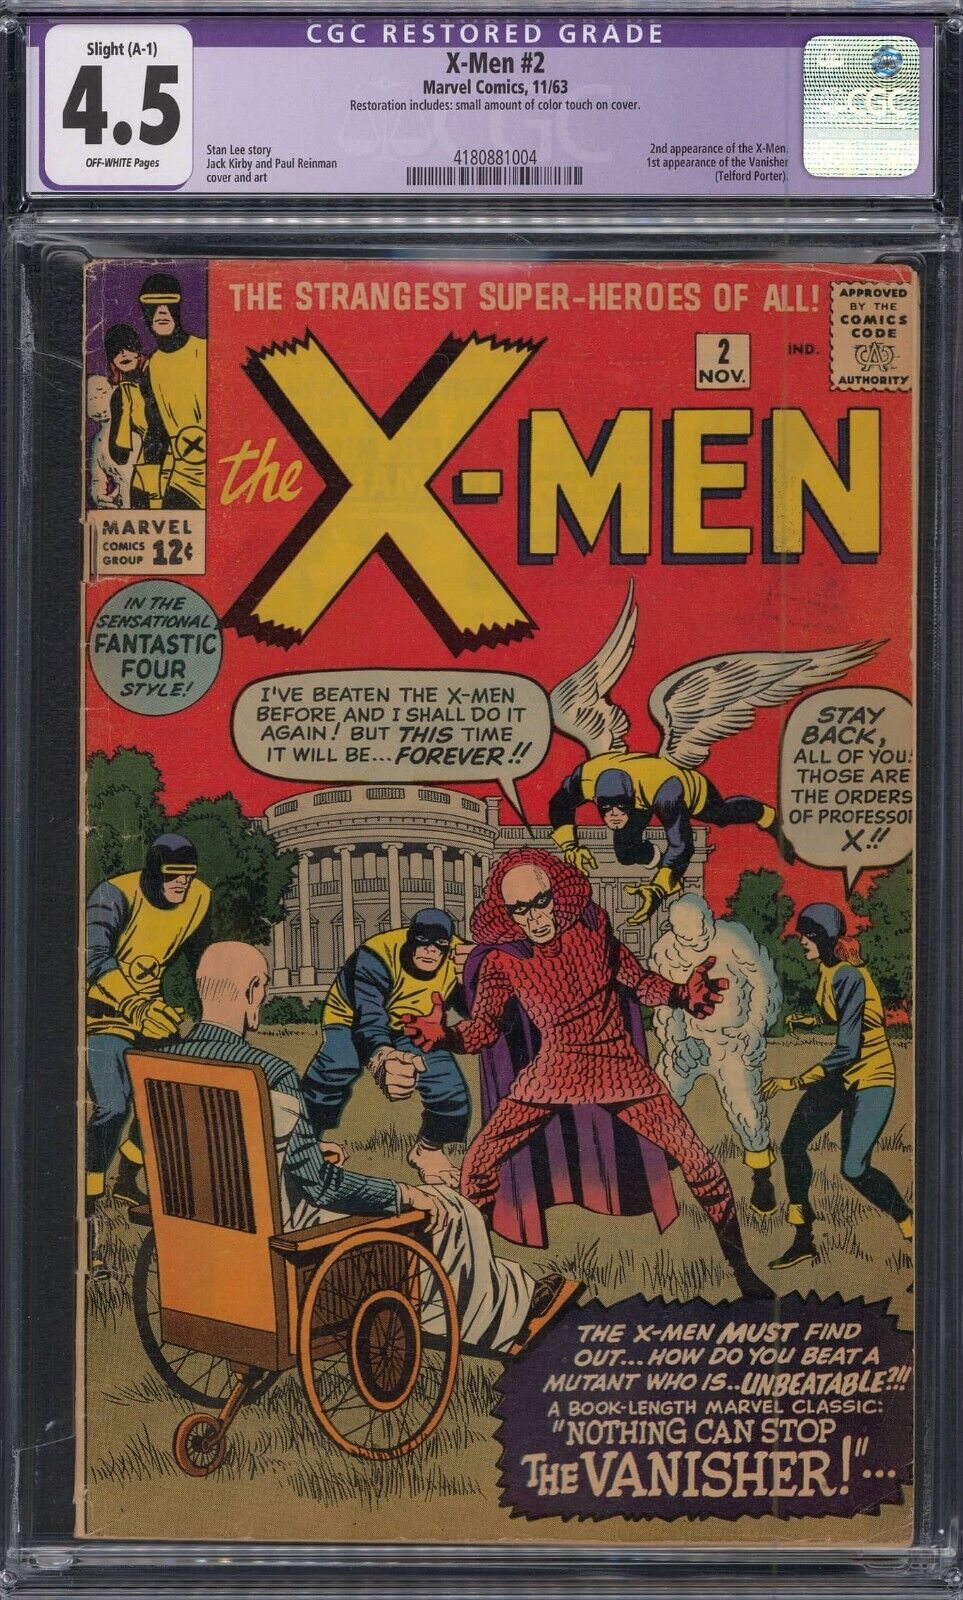 1963 Marvel X-Men #2 CGC 4.5 2nd Appearance of X-Men Restored Grade Slight A-1